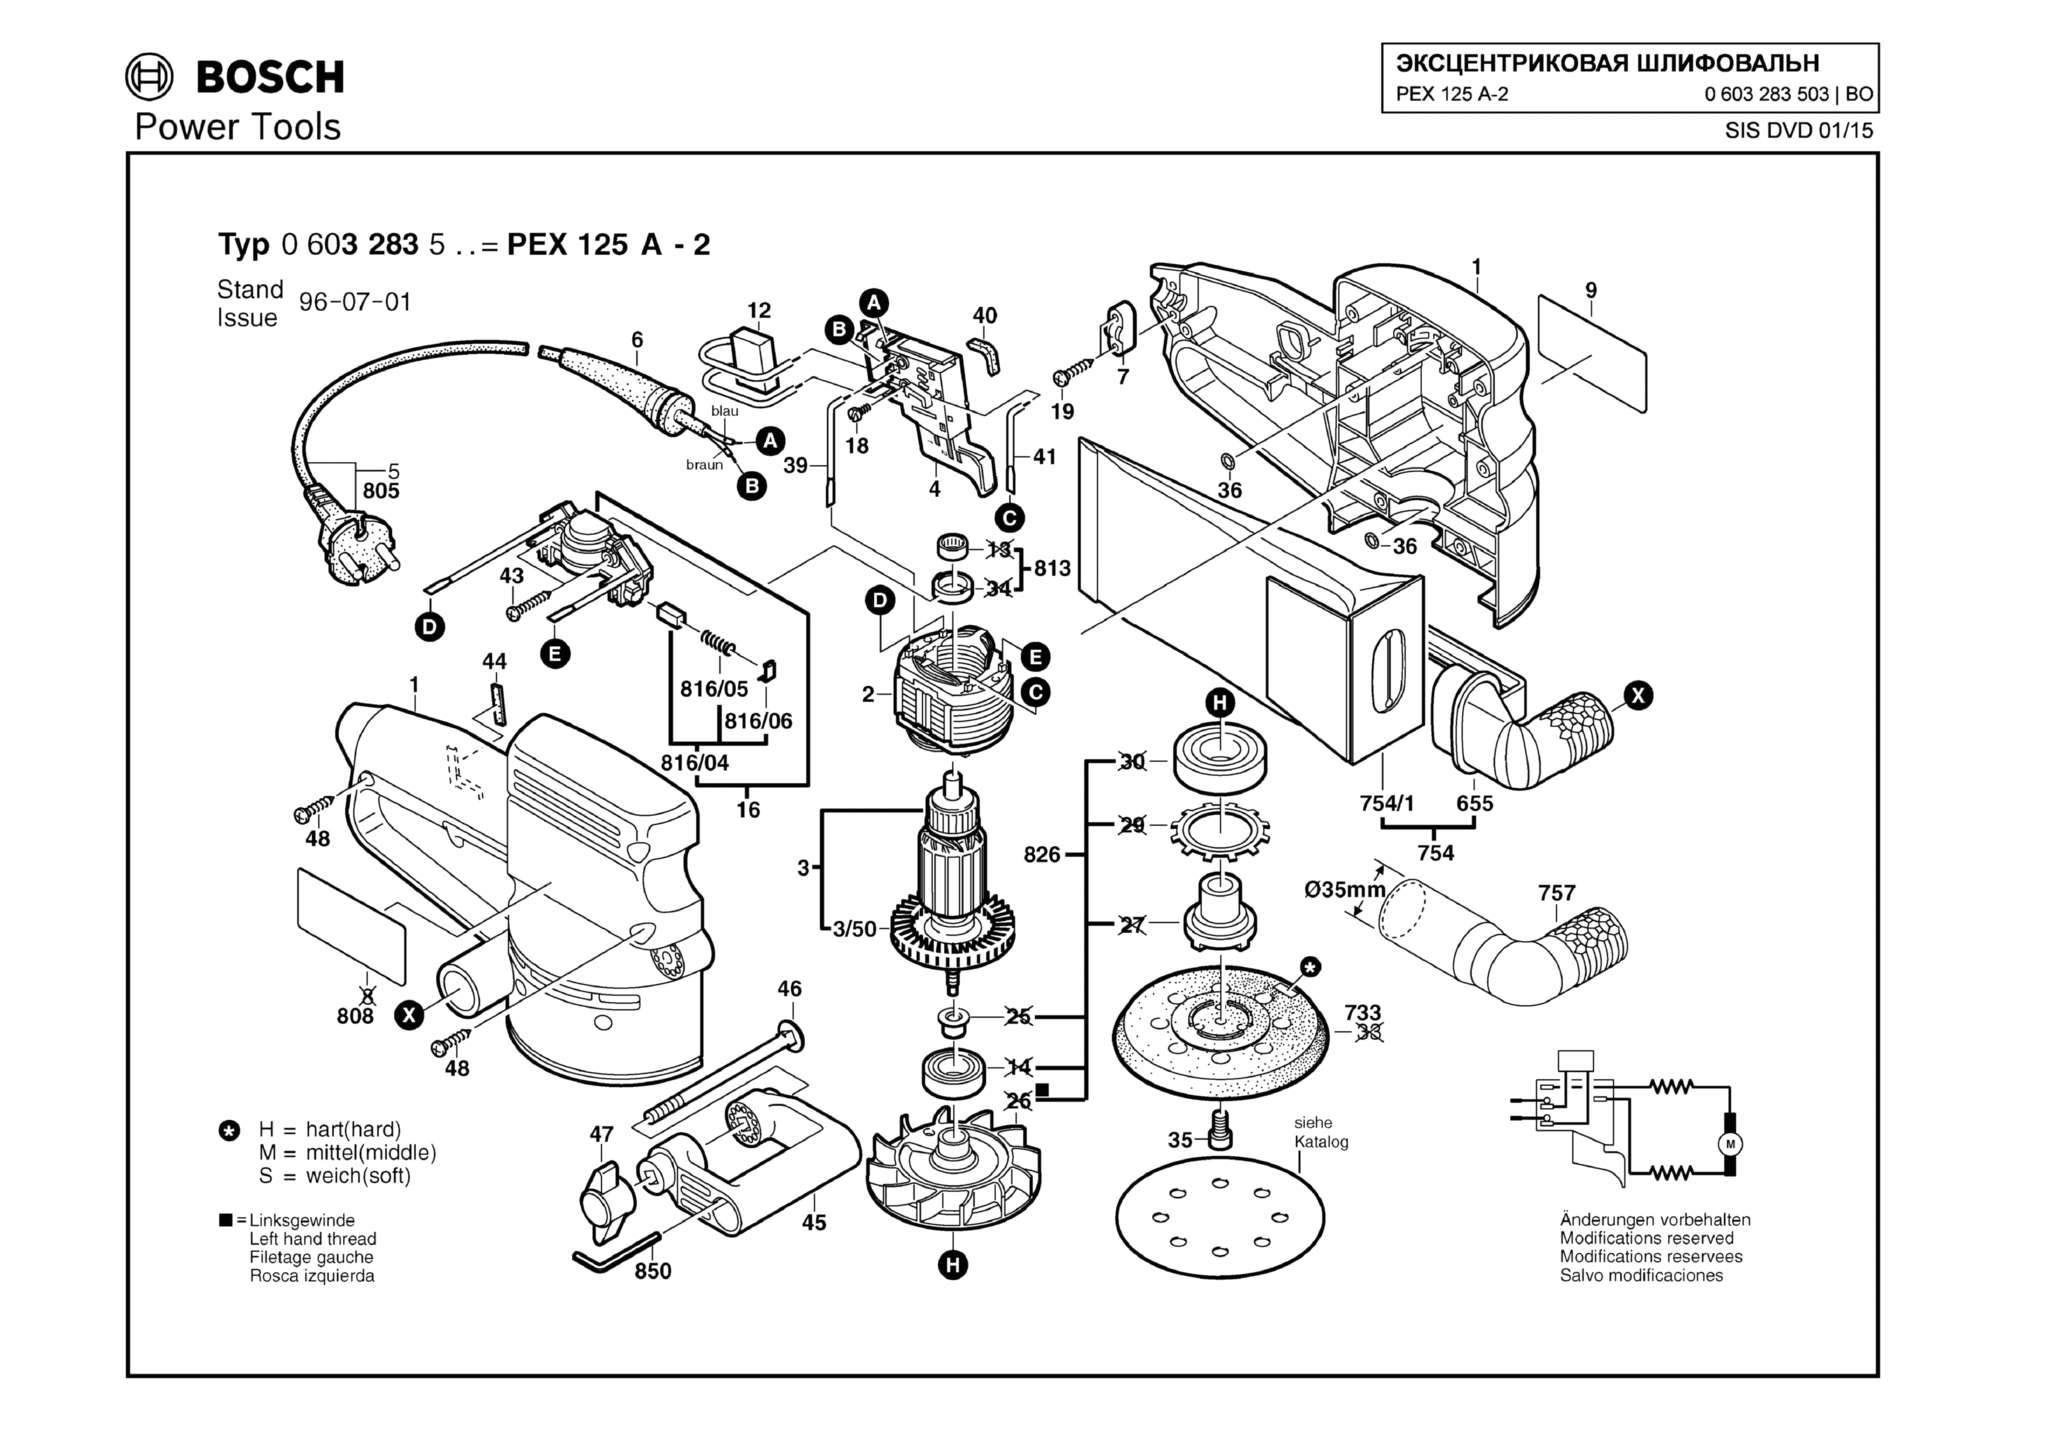 Запчасти, схема и деталировка Bosch PEX 125 A-2 (ТИП 0603283503)